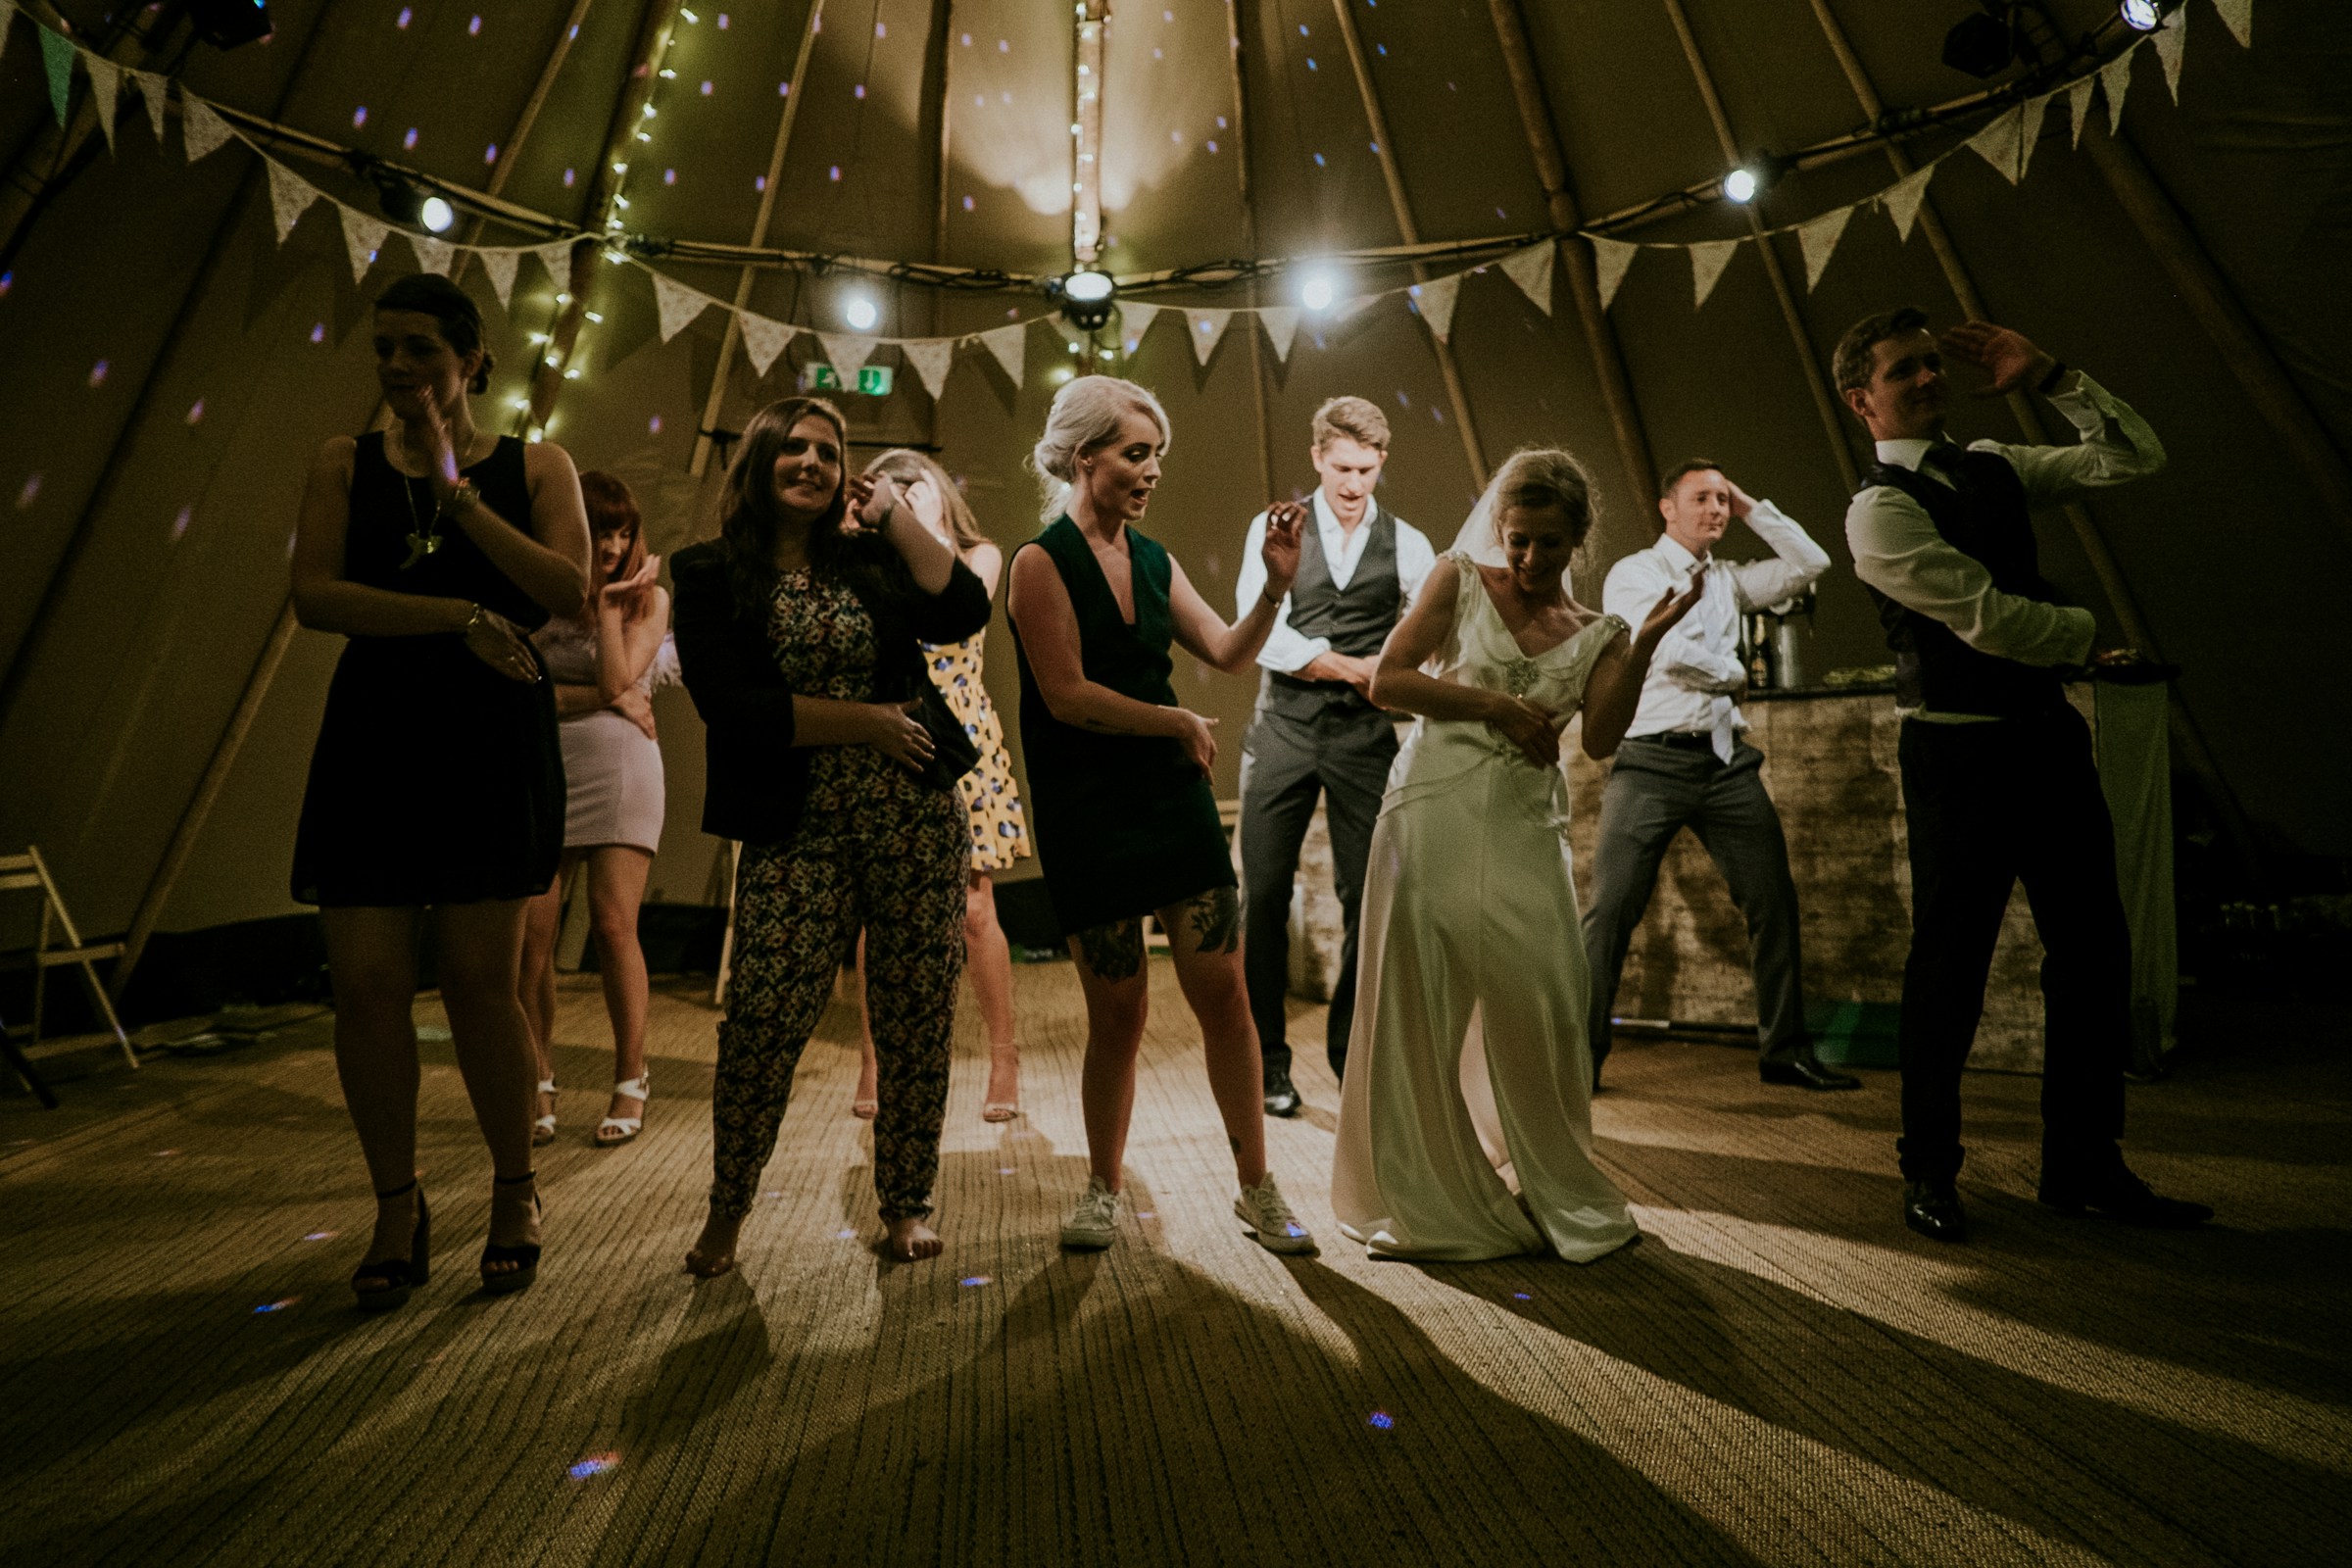 Dancing people at a wedding | Source: Unsplash